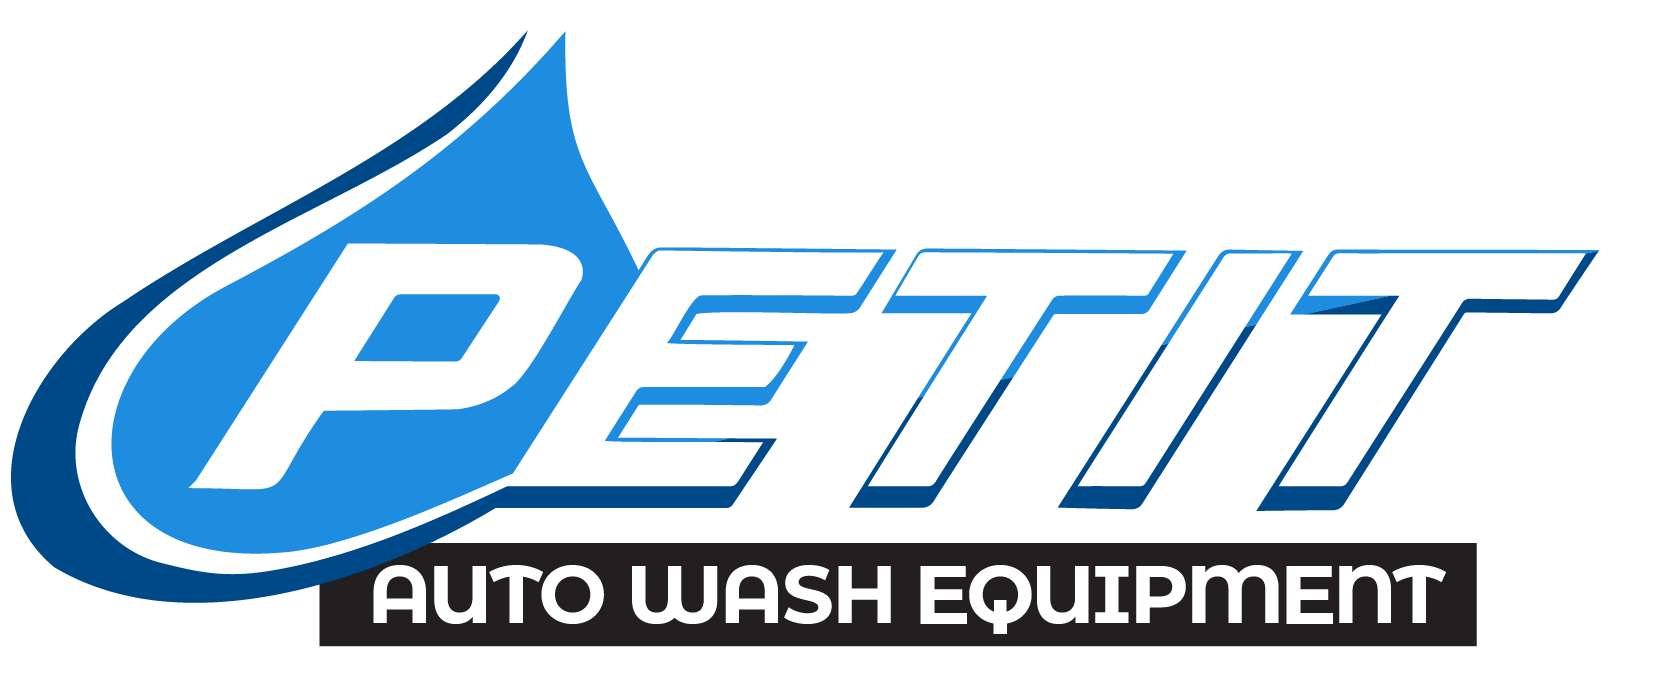 petit auto wash equipment logo rebrand